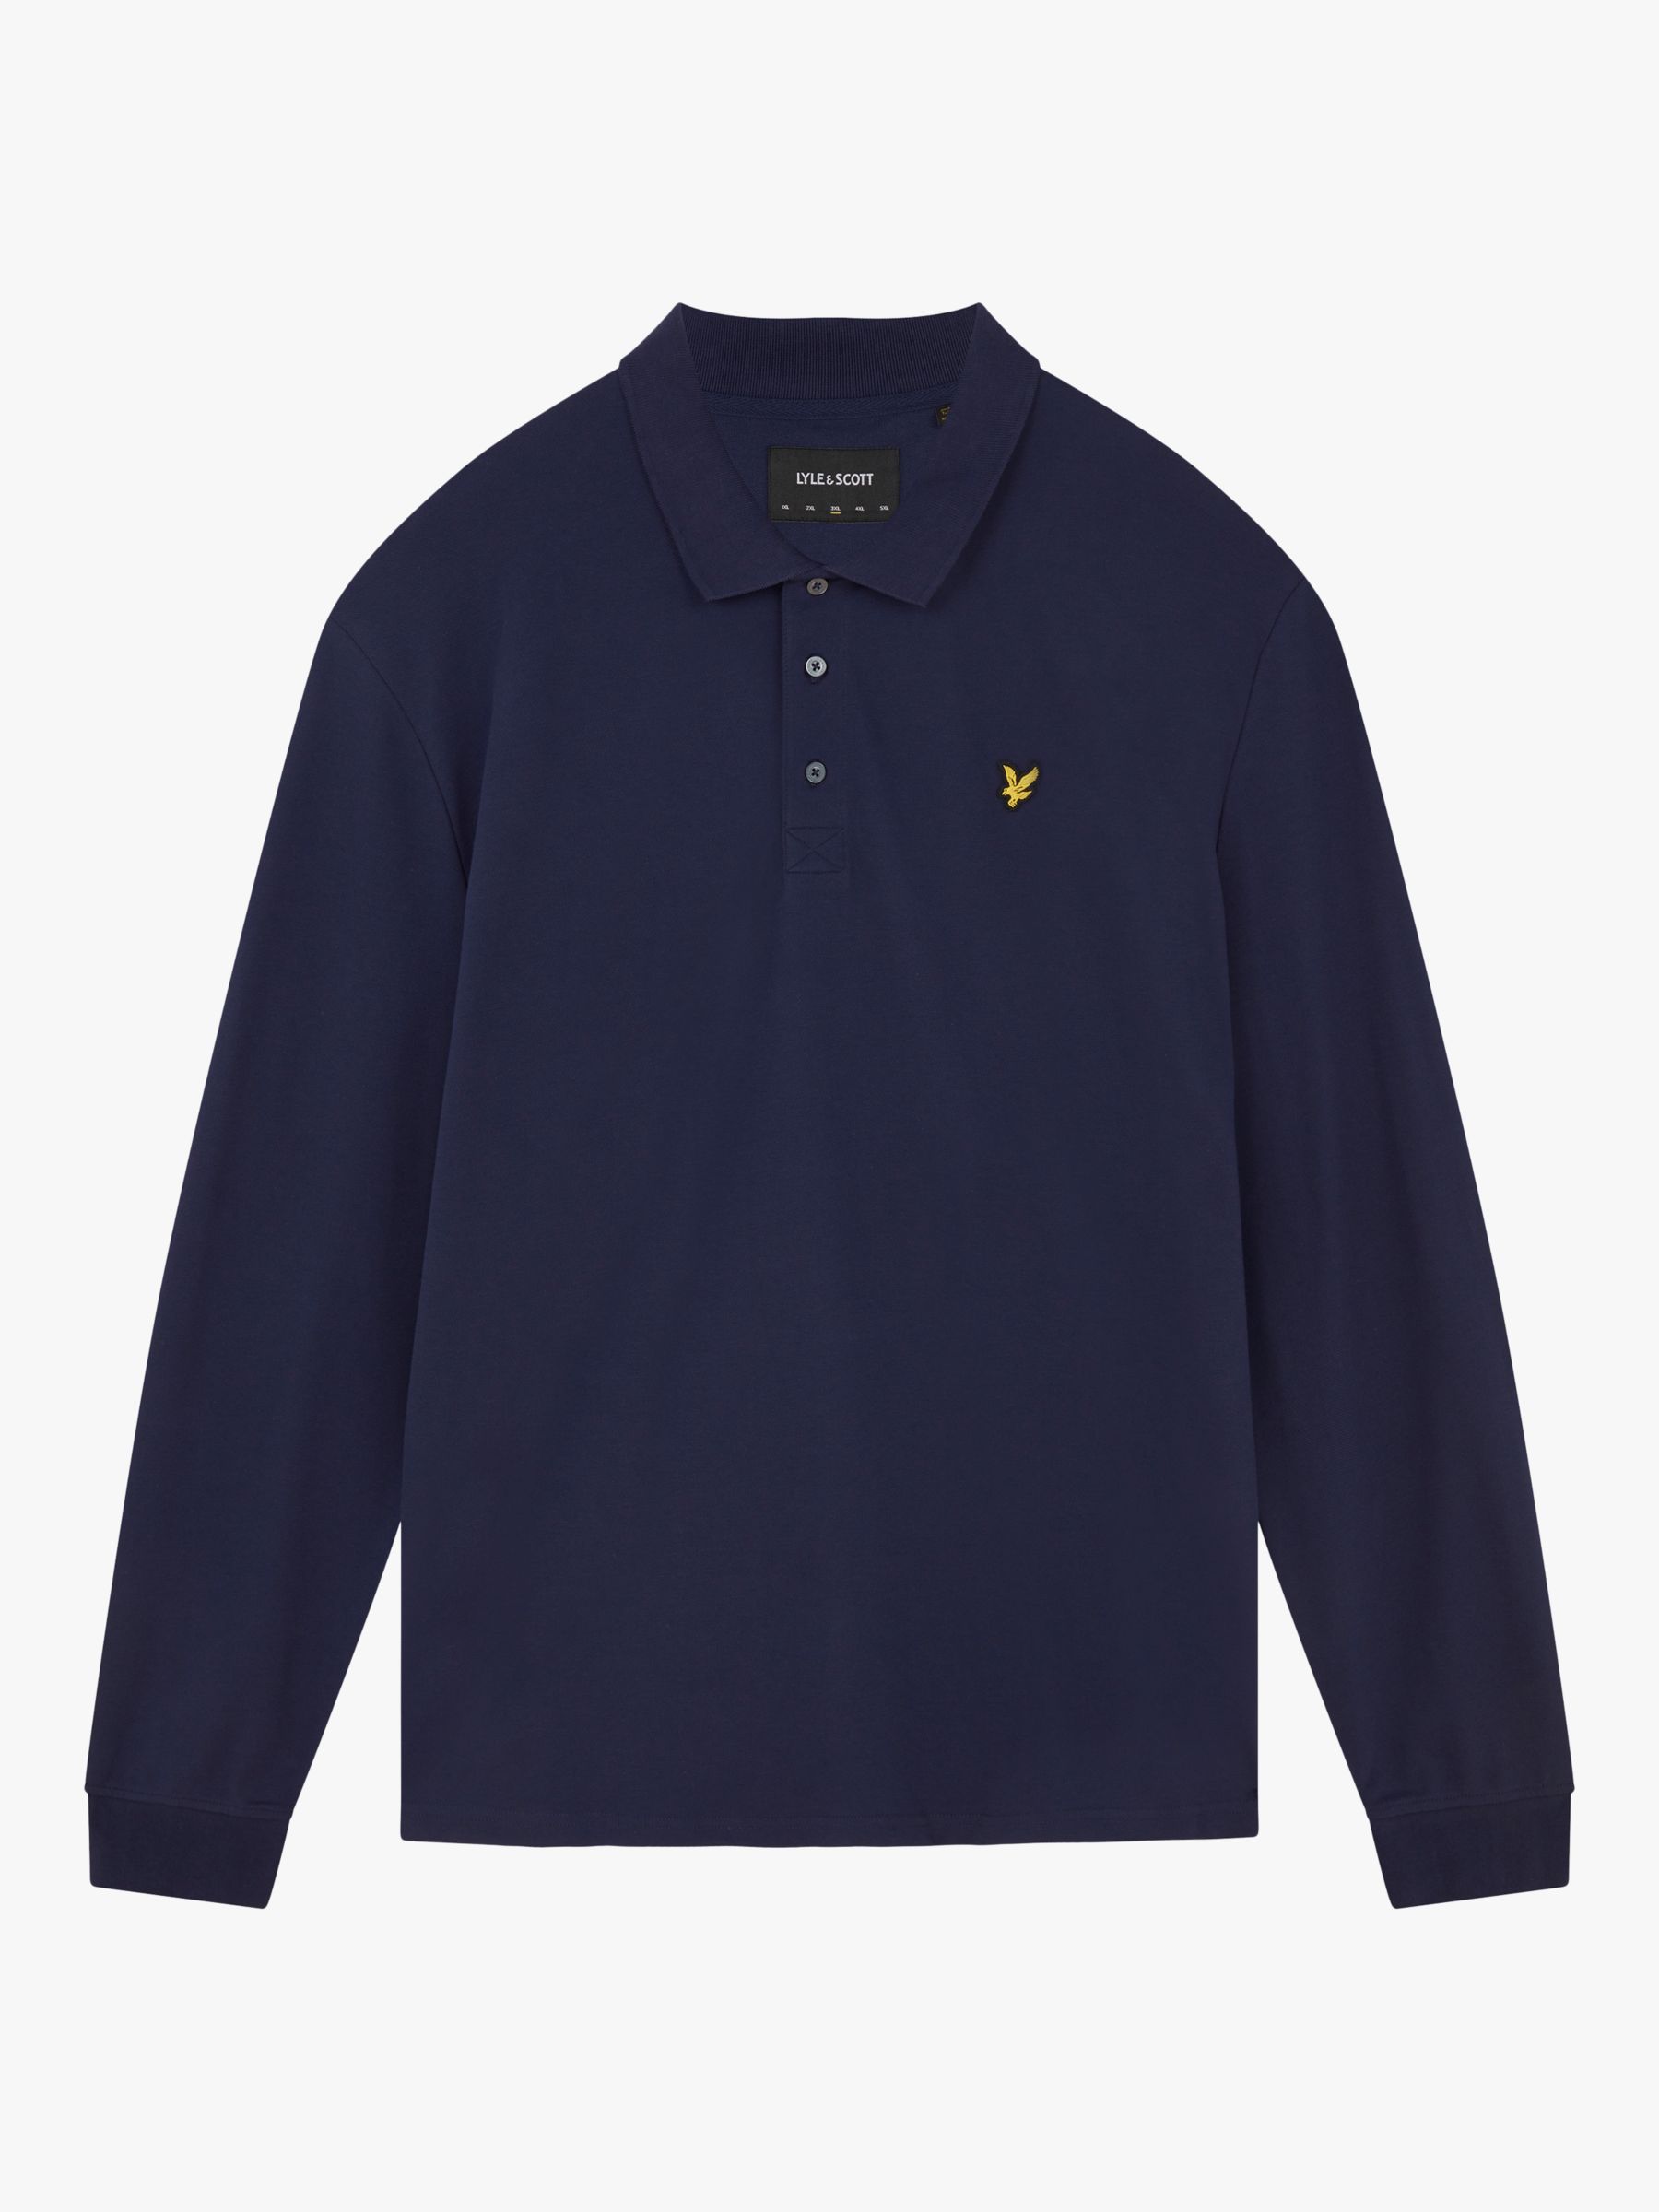 Lyle & Scott Long Sleeve Polo Shirt, Navy, L